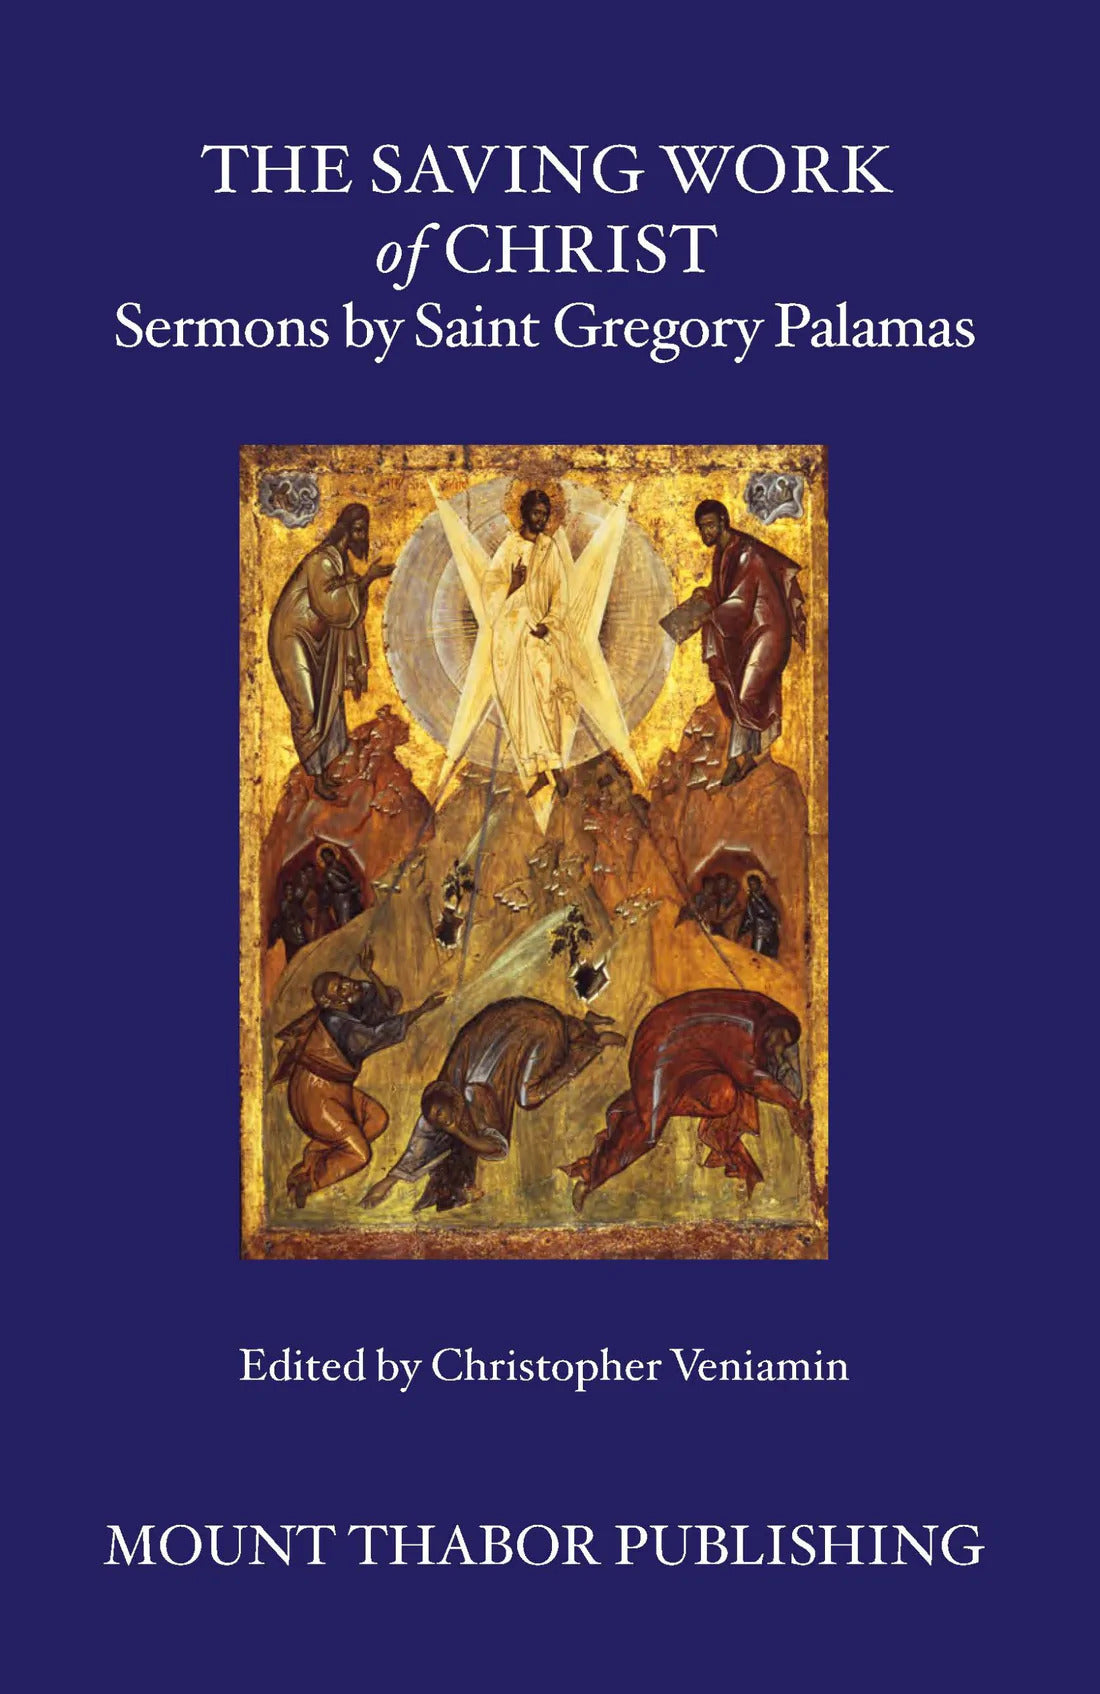 Sermons by Saint Gregory Palamas: The Saving Work of Christ